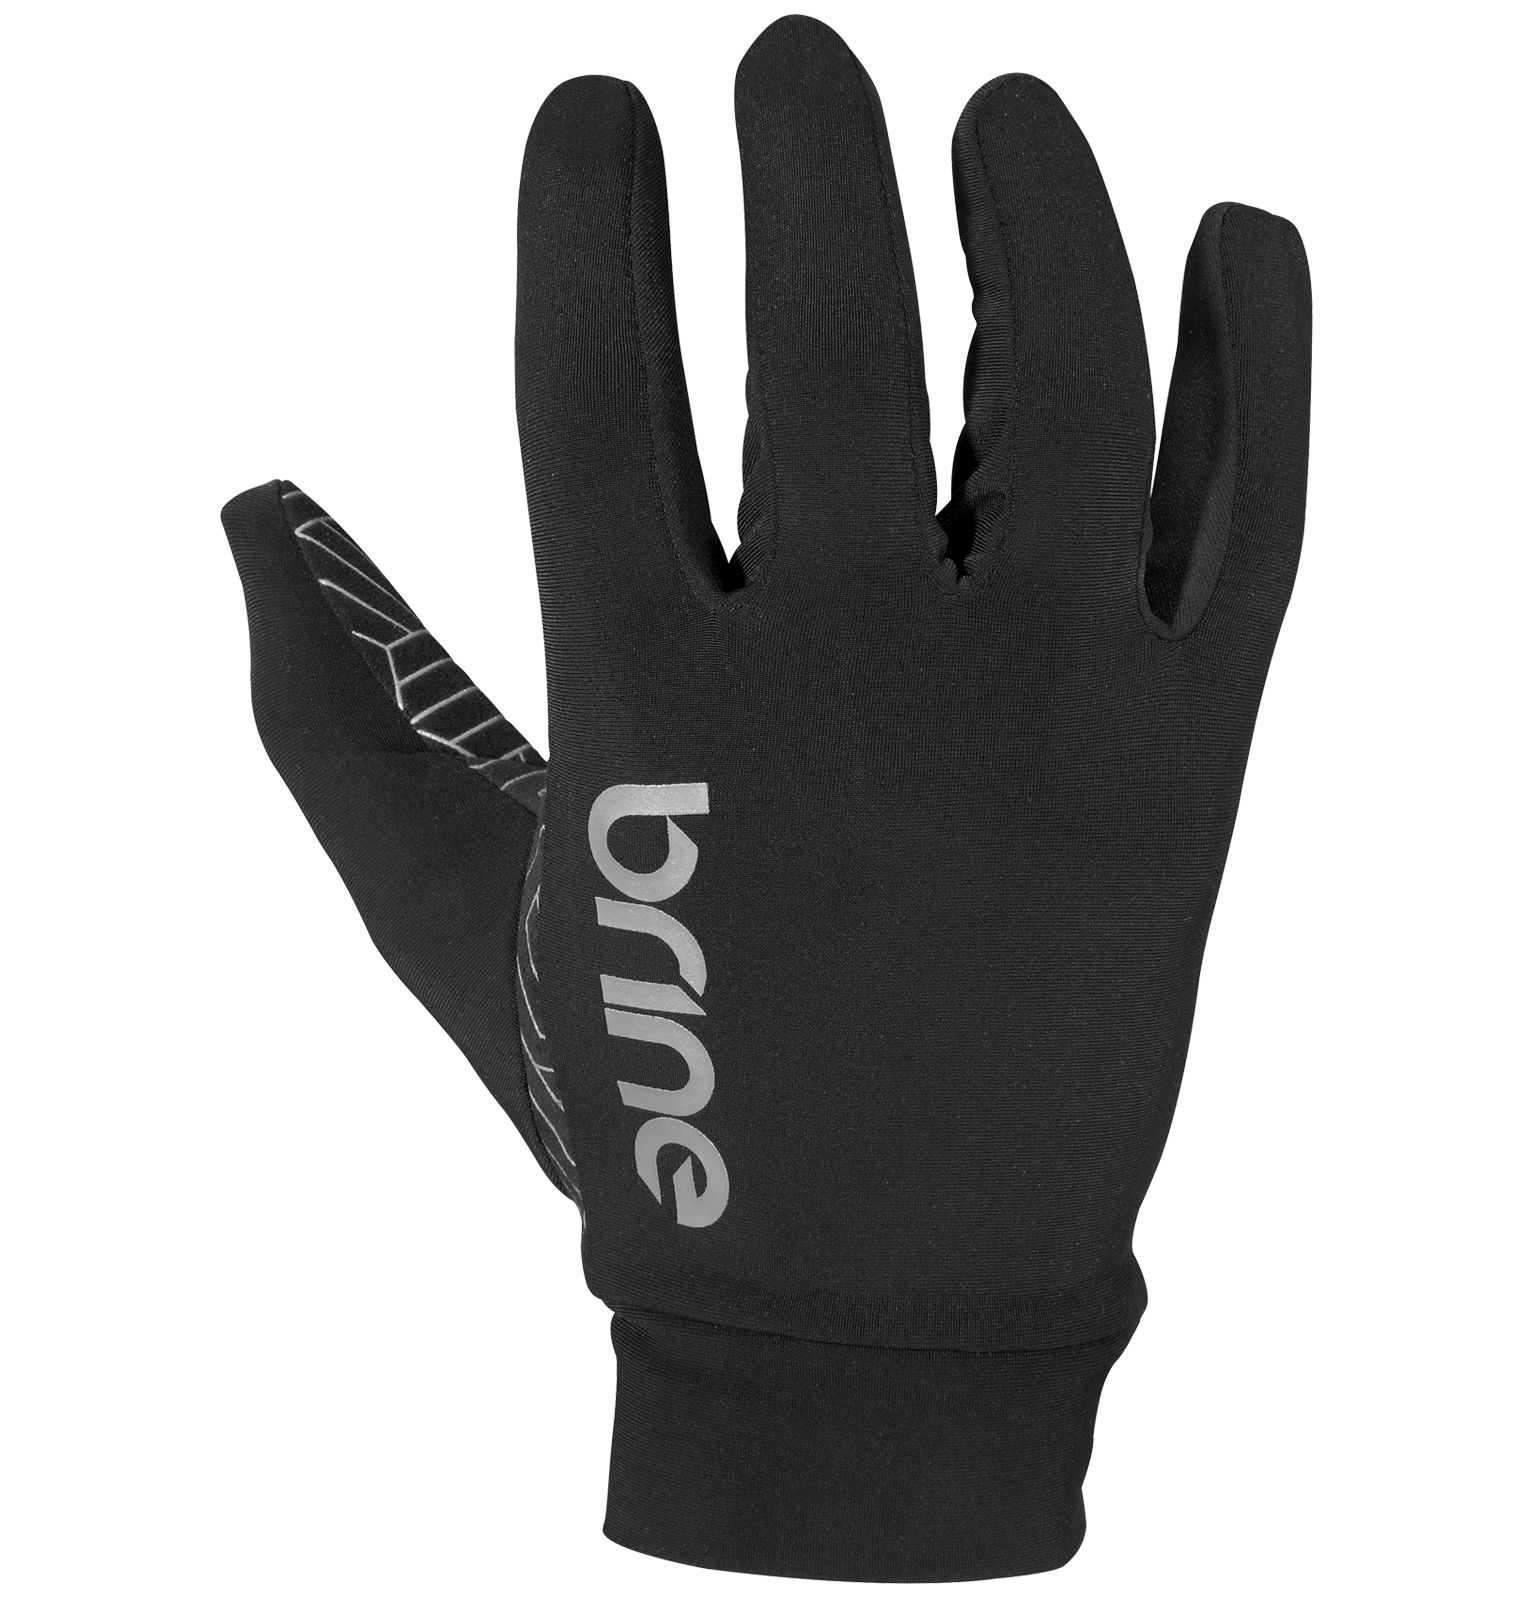 '18 Field Player Glove, Black image number 0